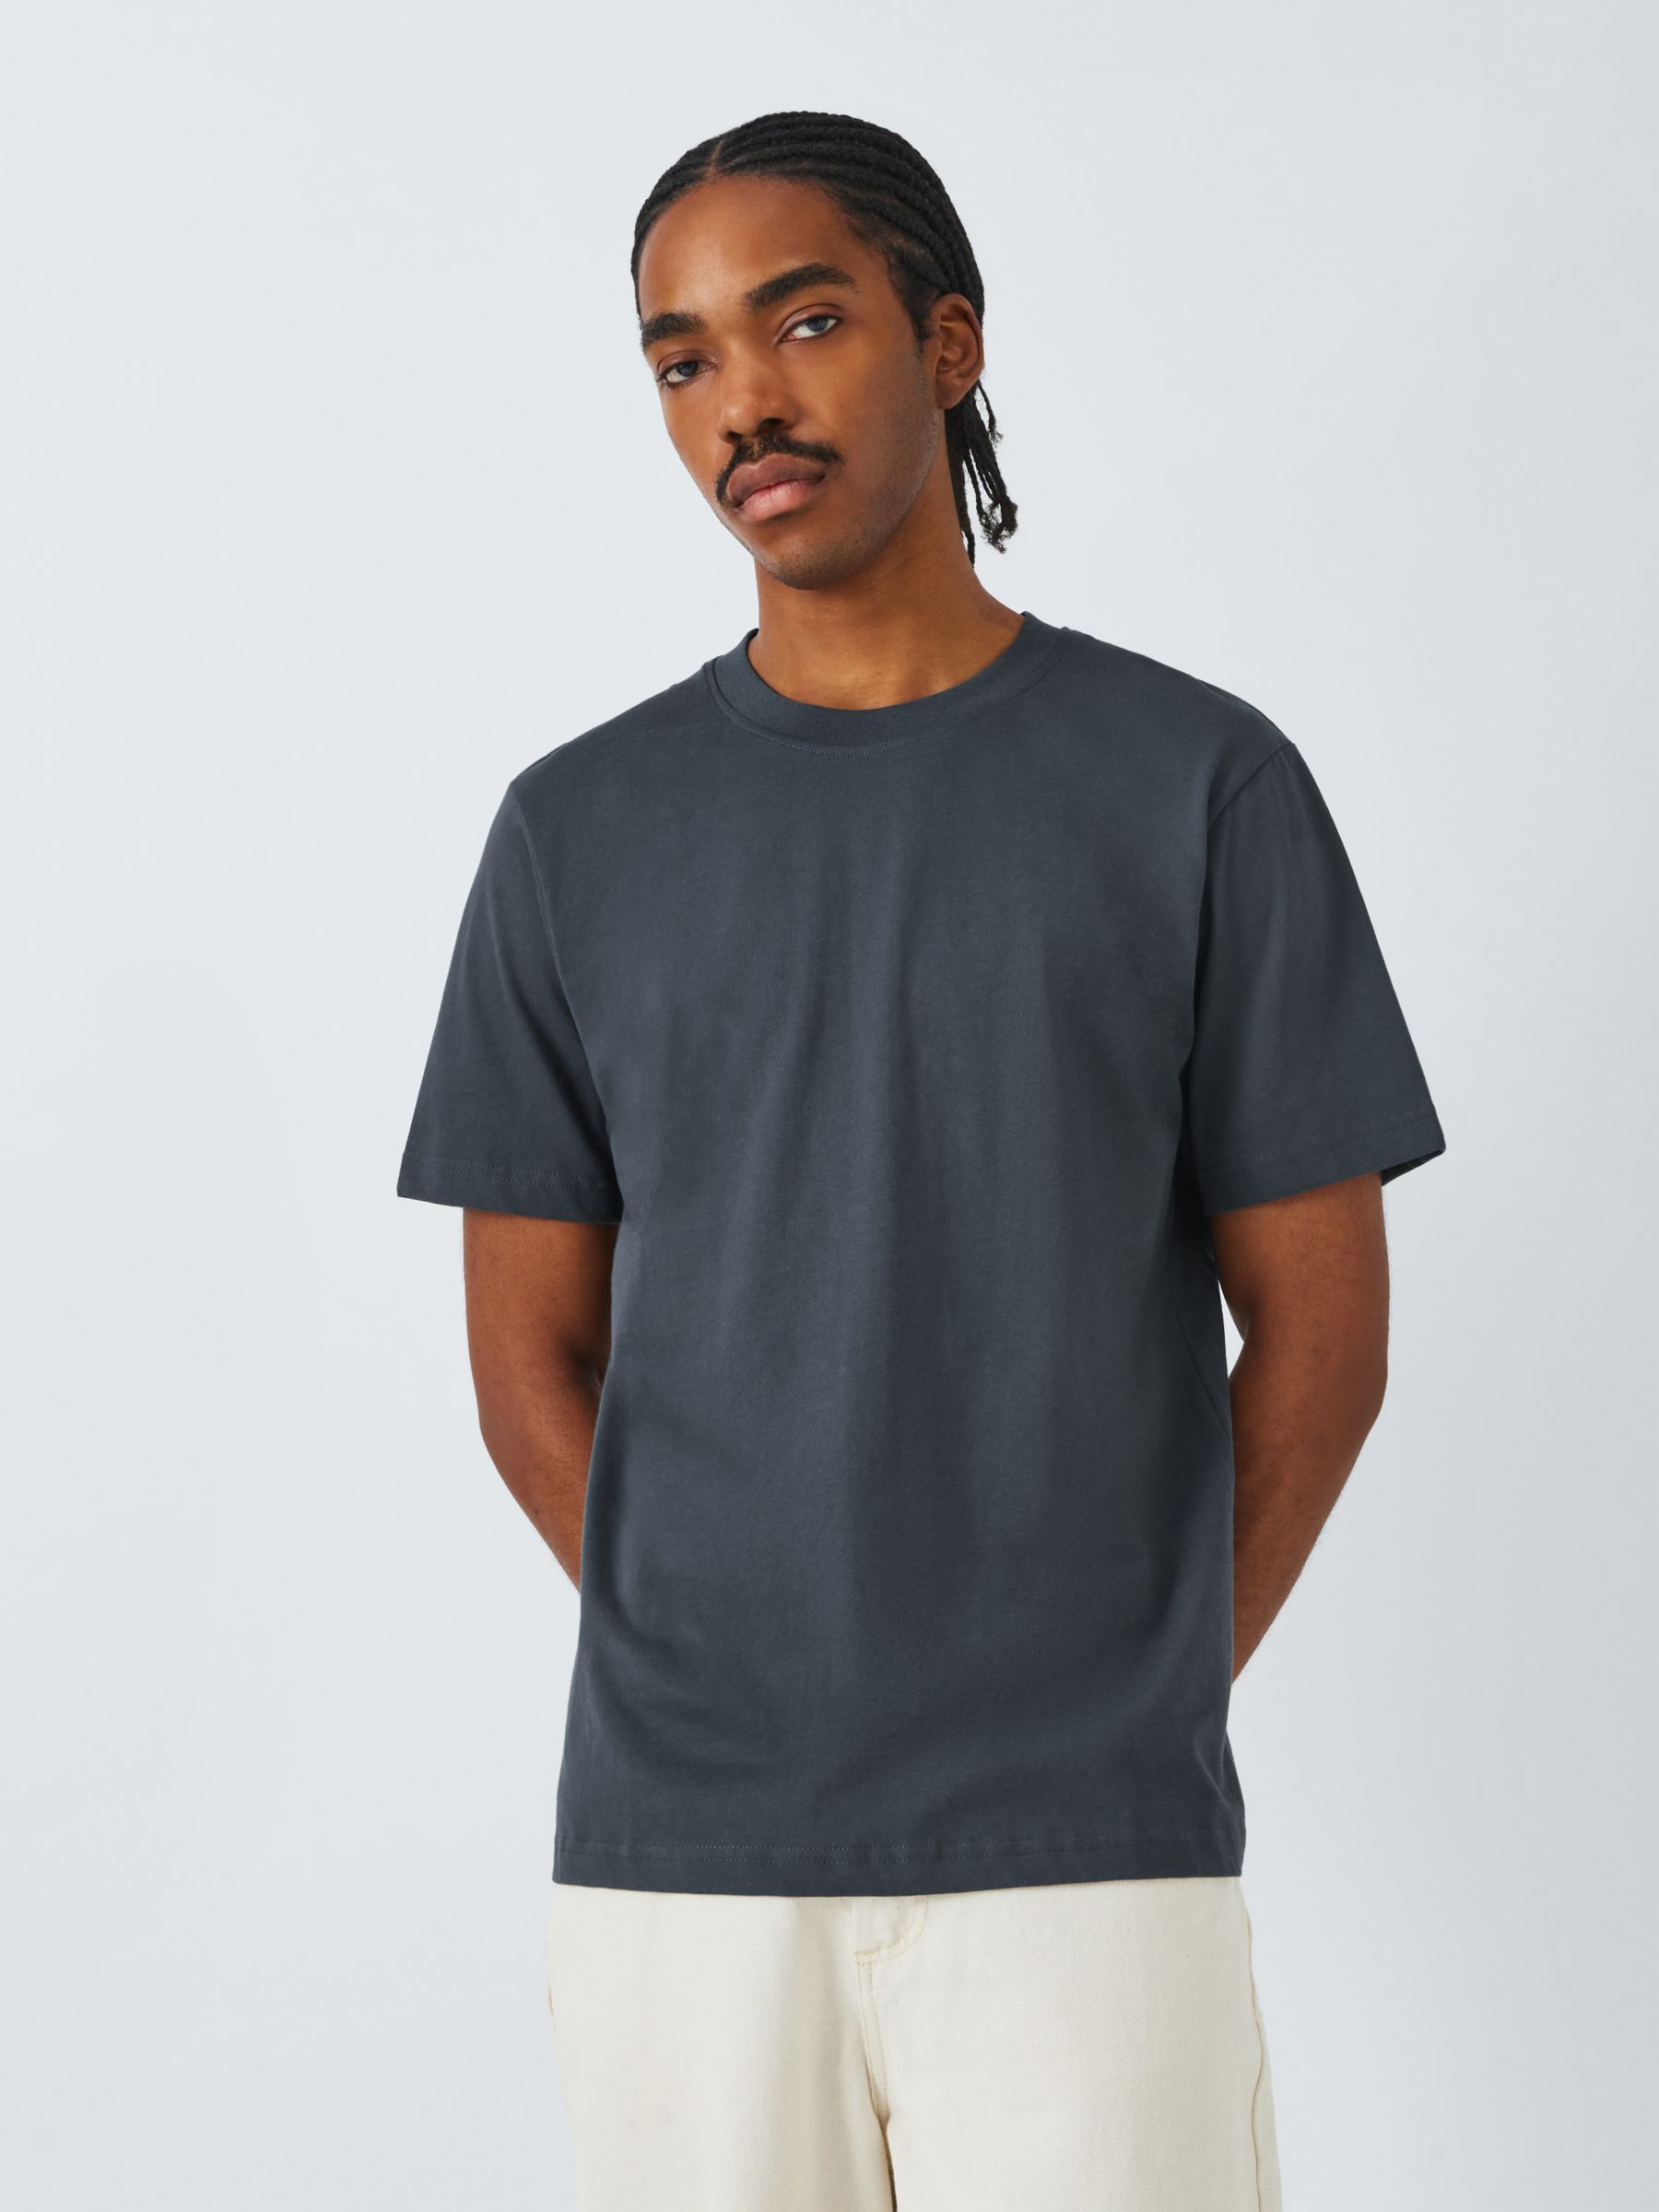 John Lewis ANYDAY Cotton Crew Neck T-Shirt, Midnight Grey, S